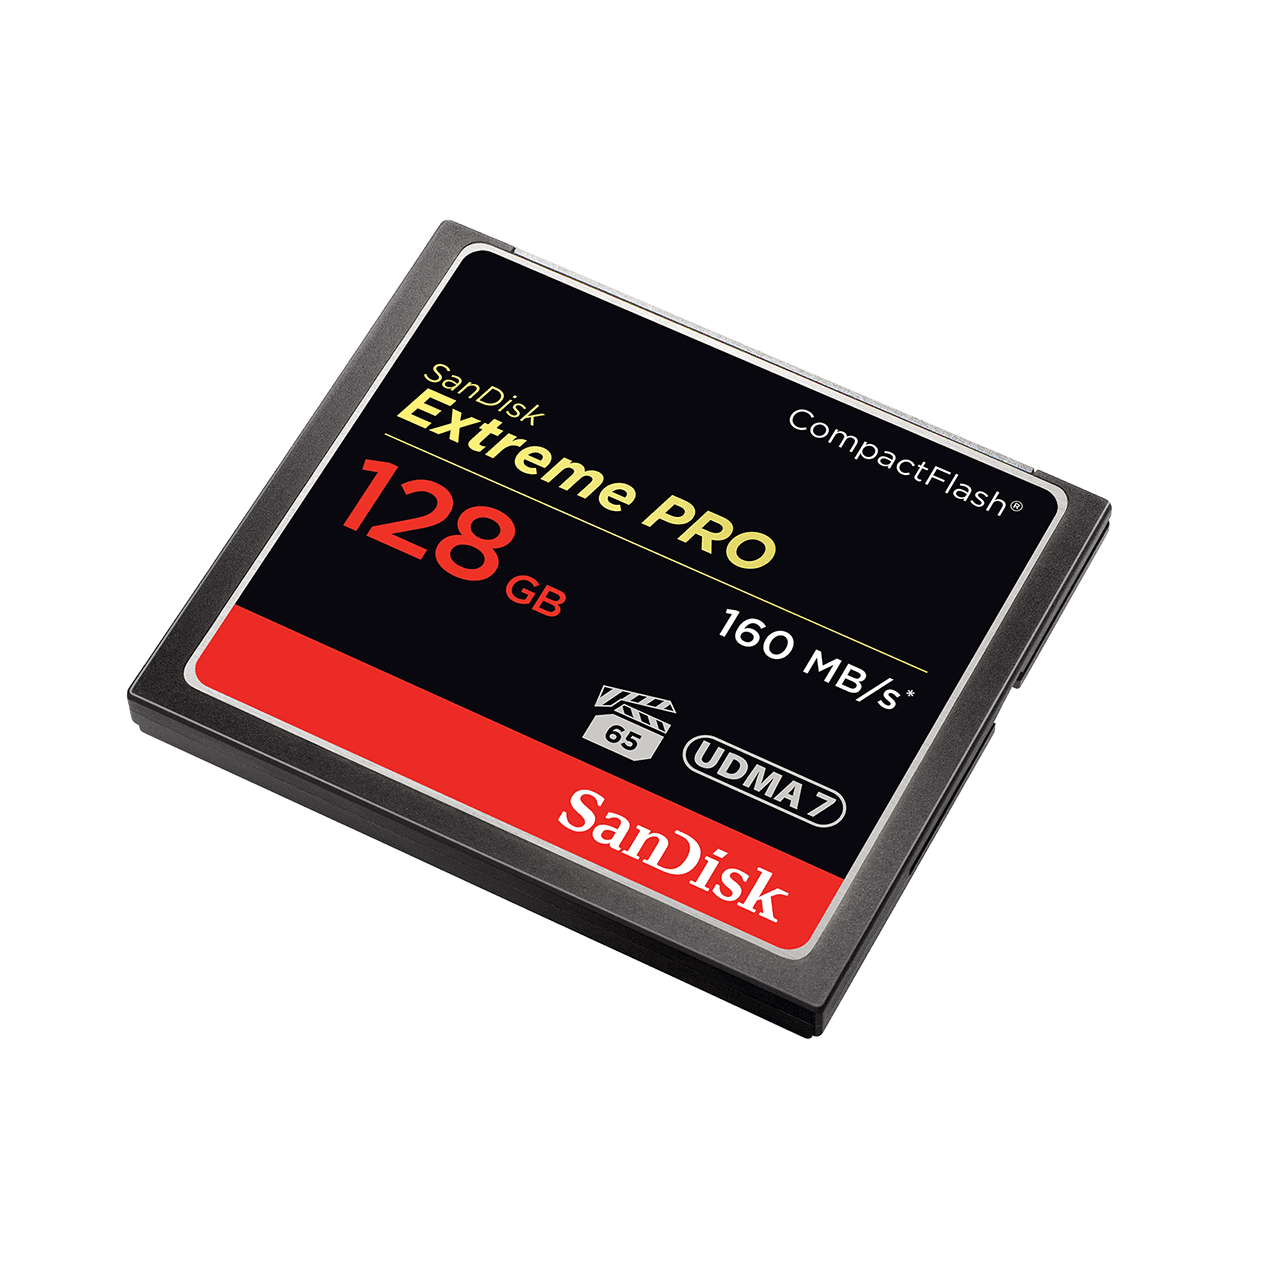 Sandisk Compact Flash Extreme Pro 128GB  skos prawy